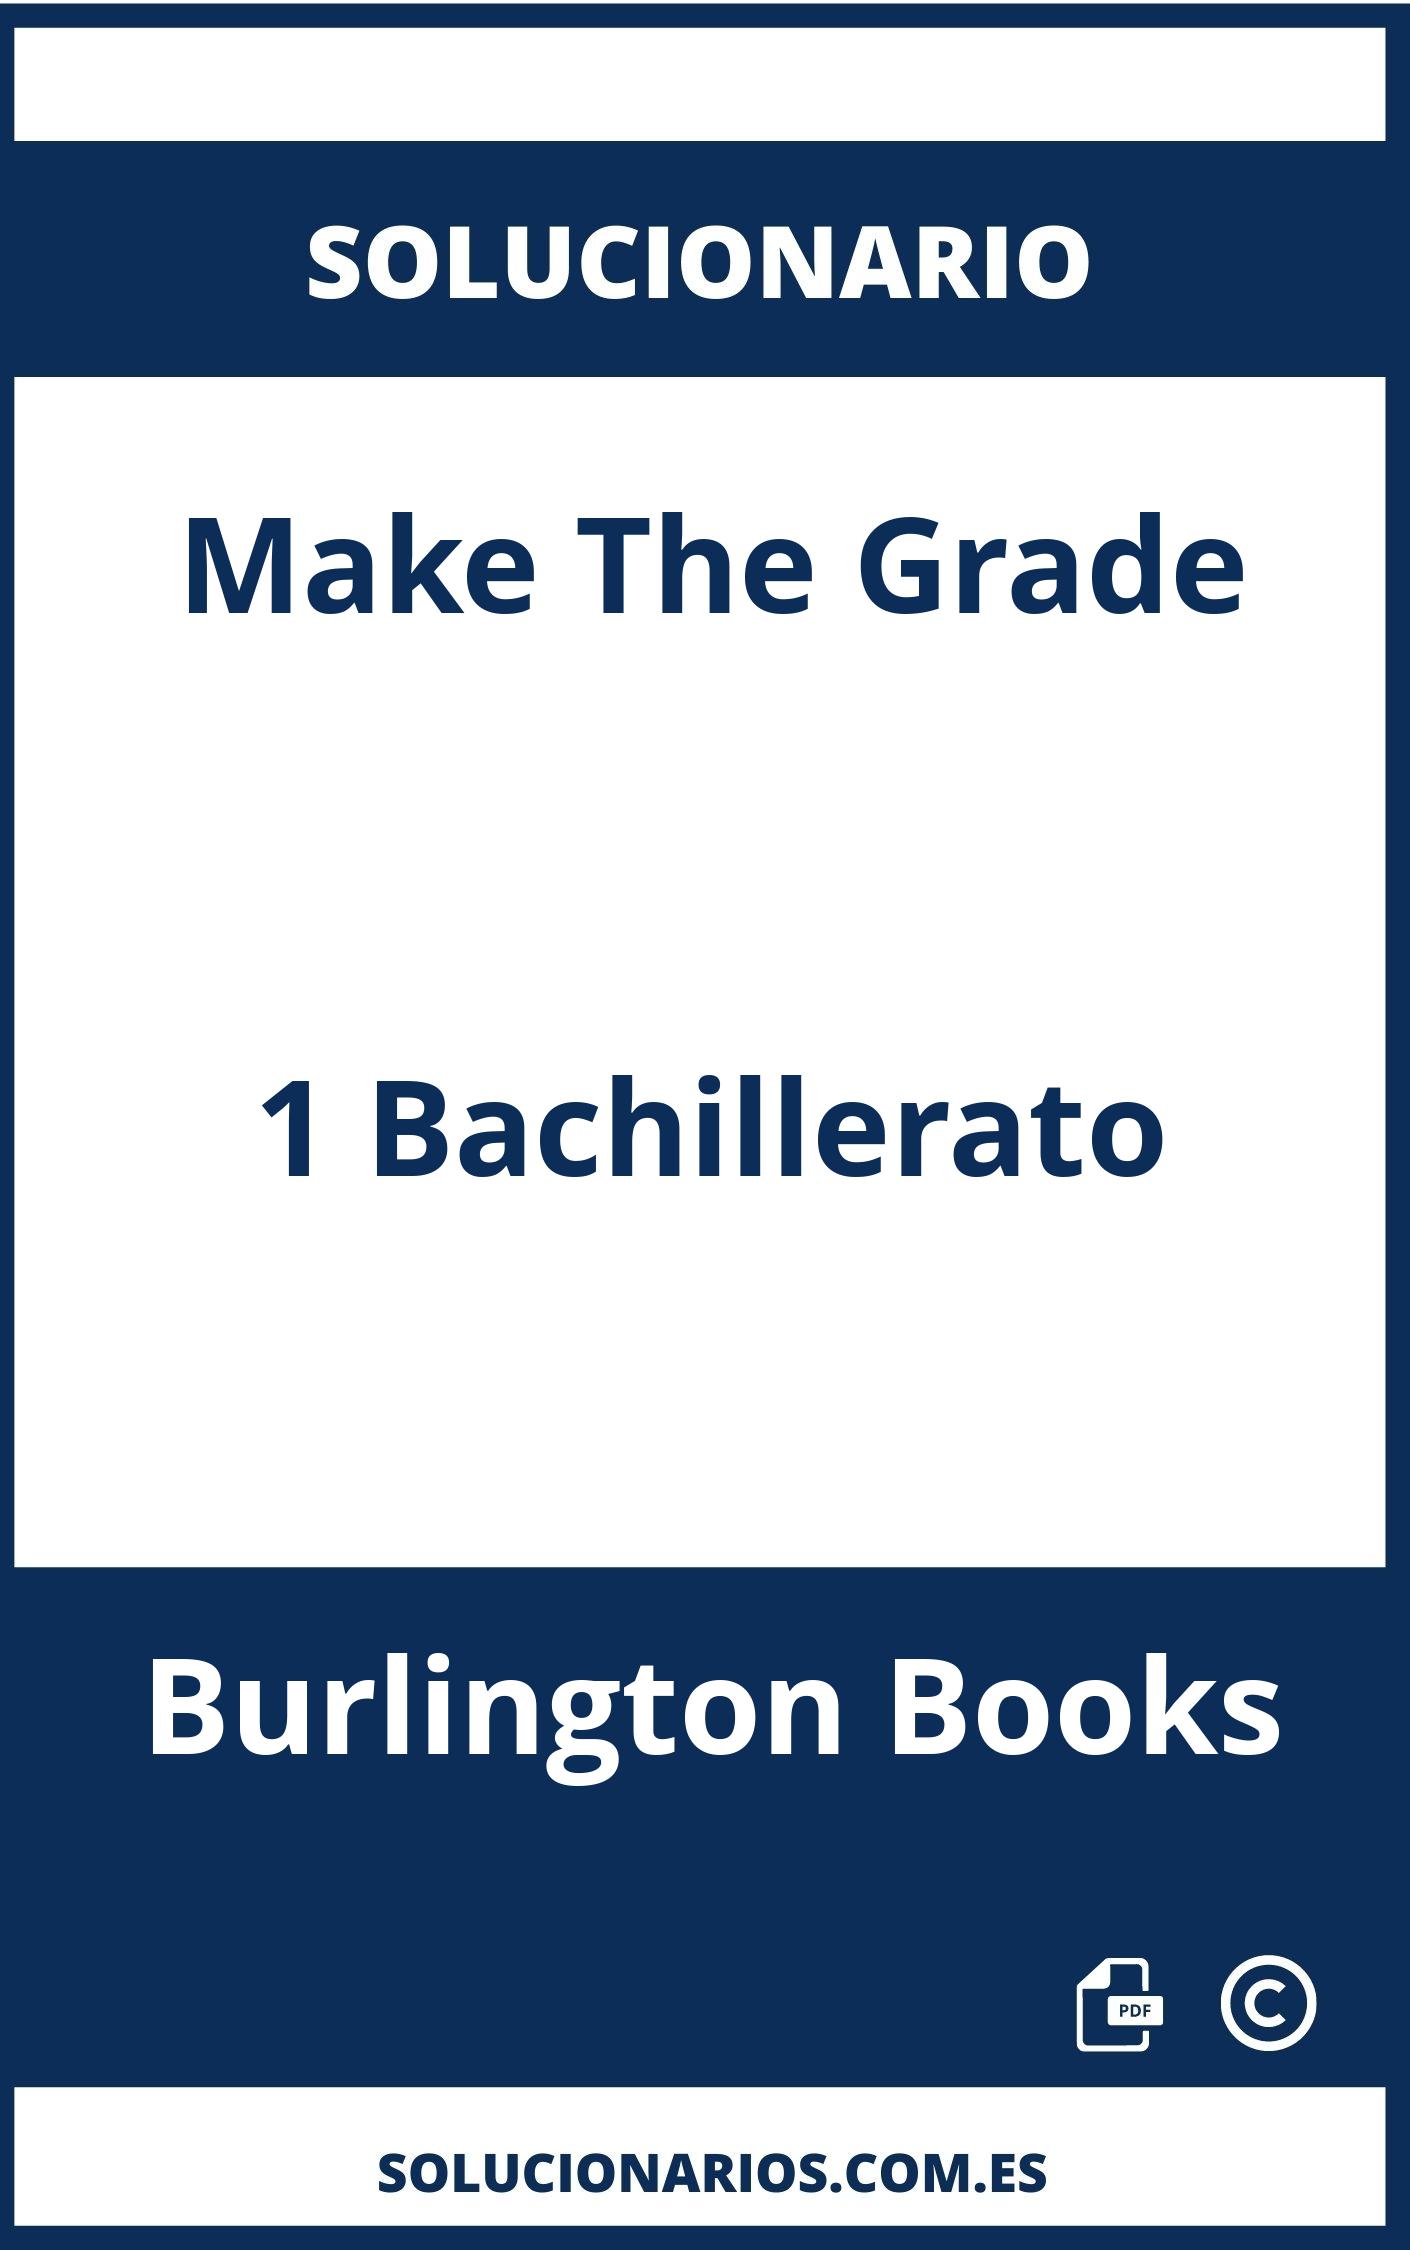 Solucionario Make The Grade 1 Bachillerato Burlington Books